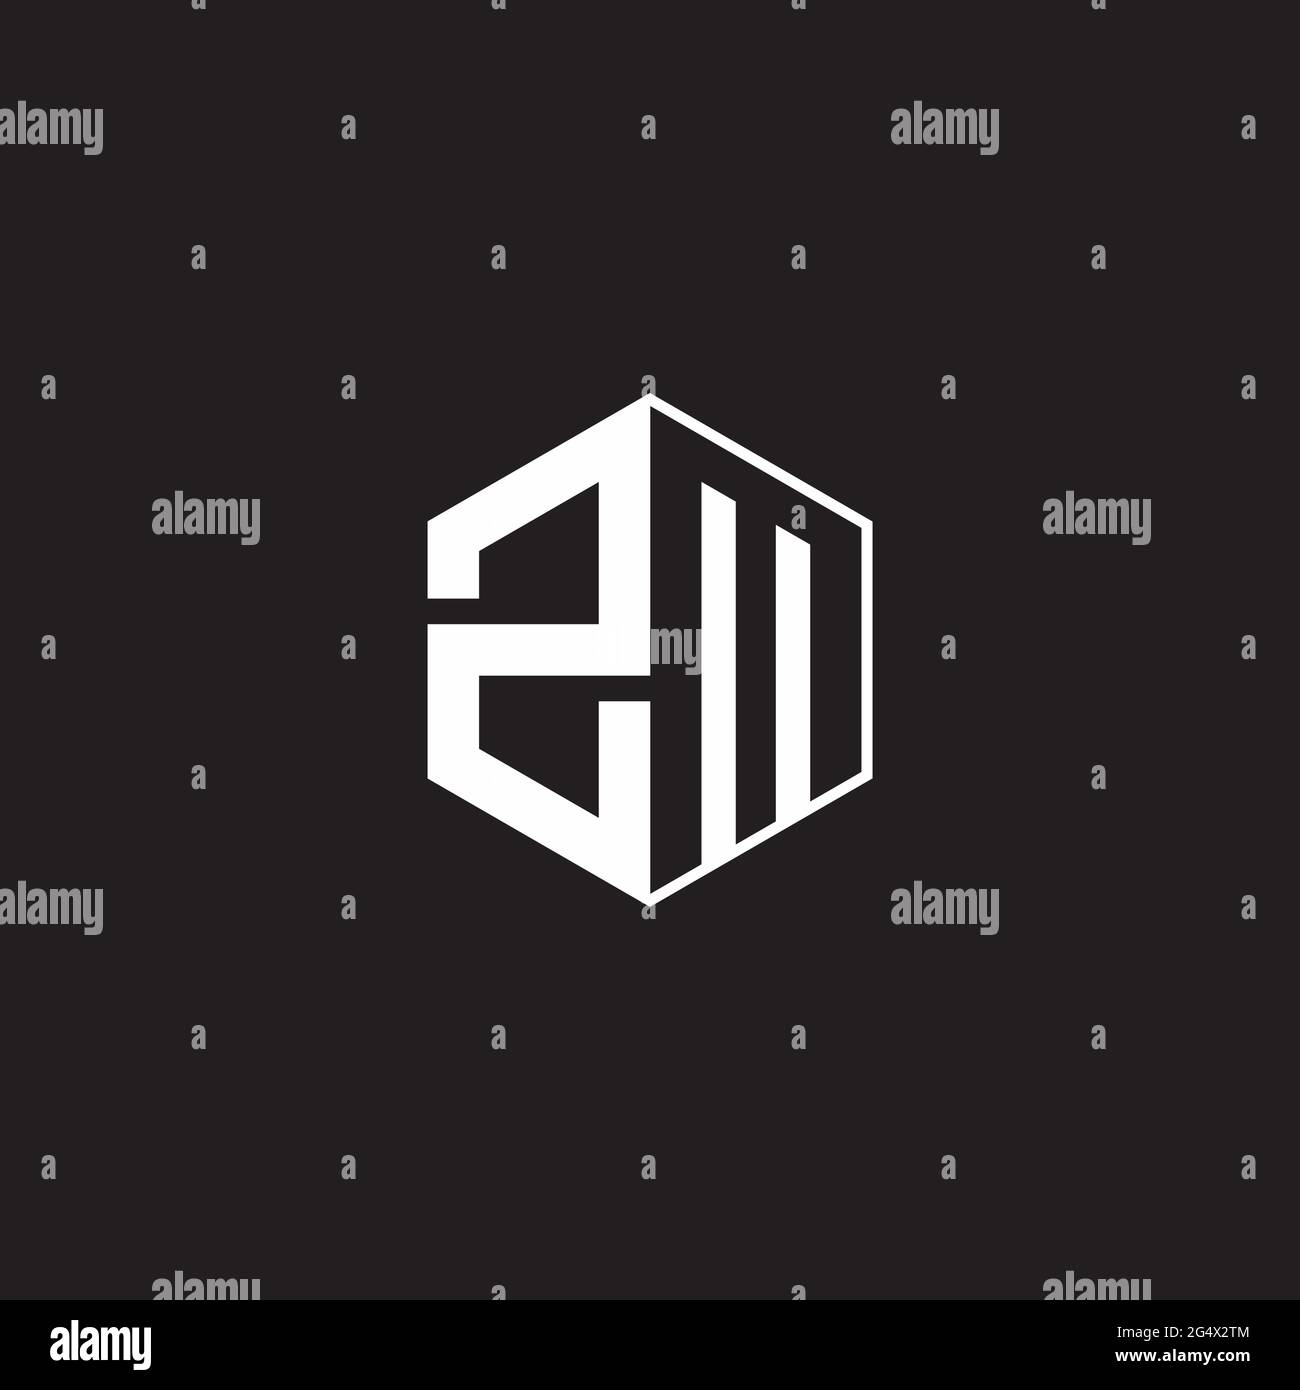 ZM Z M MZ Logo monogram hexagon with black background negative space style Stock Vector